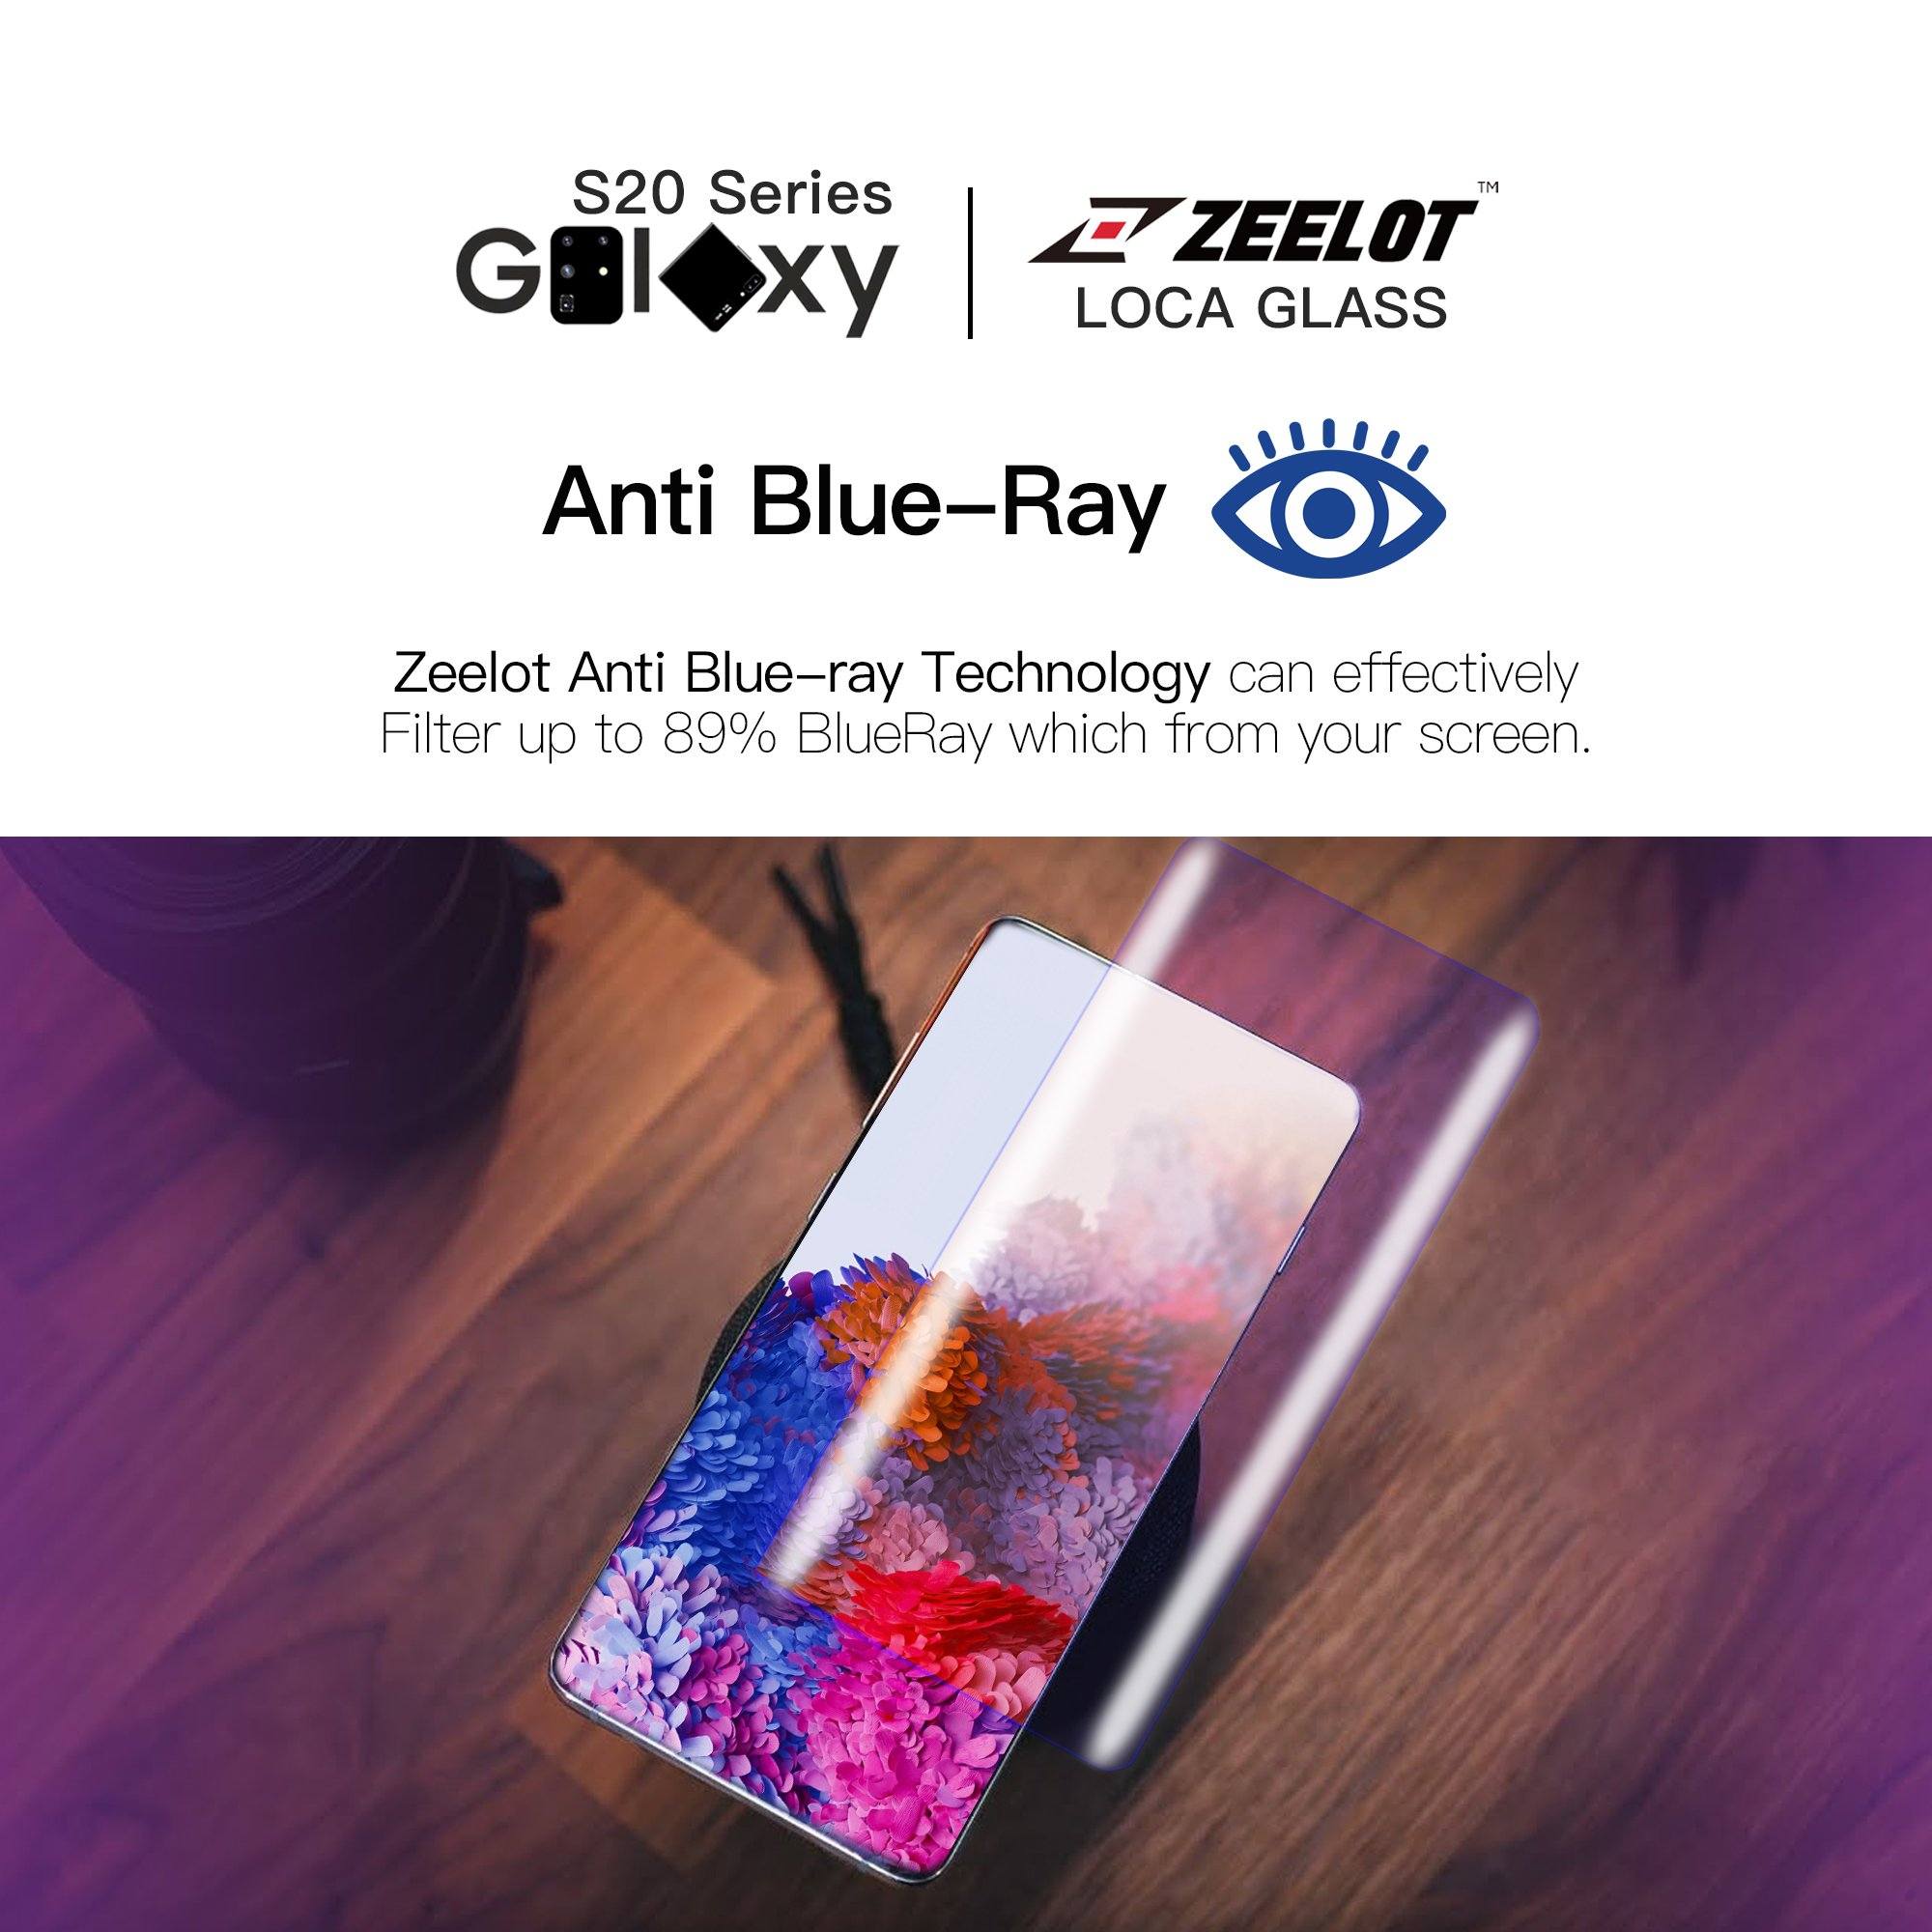 ZEELOT PureGlass 3D Anti Blue LOCA Corning Tempered Glass Screen Protector for Samsung Galaxy S20 Ultra Anti-Blue Ray Loca Glue Zeelot 